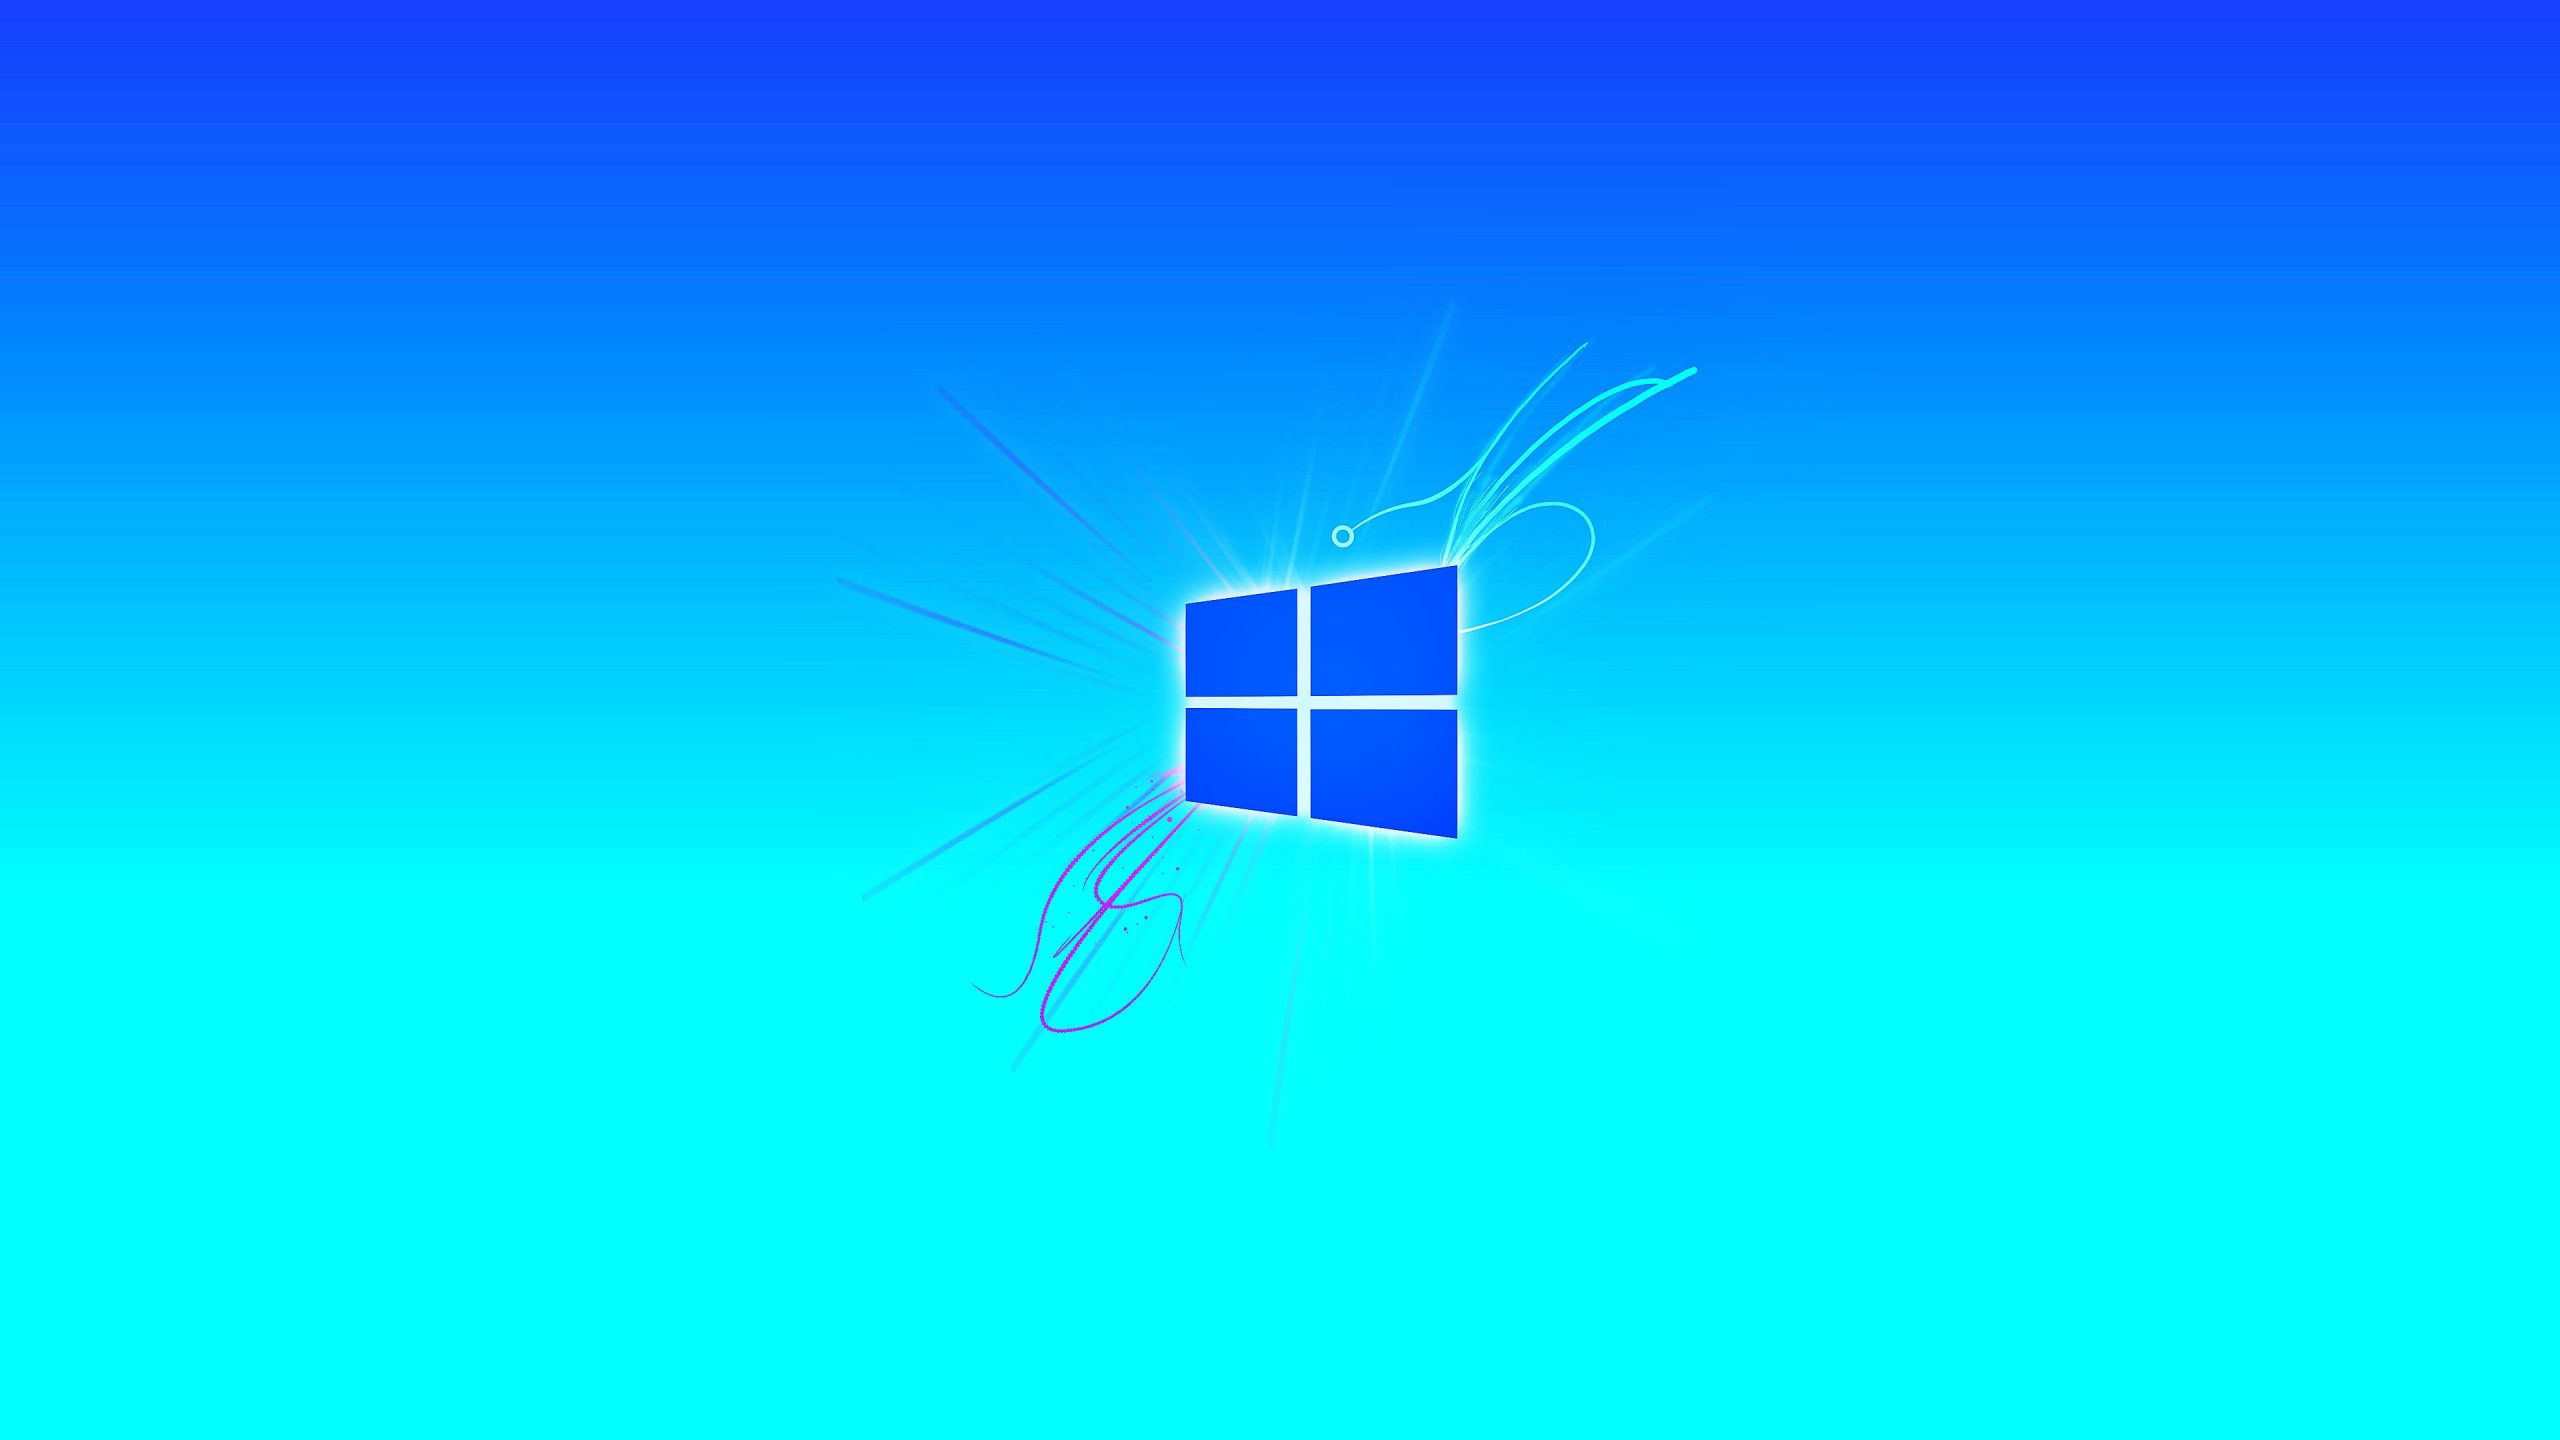 Microsoft Windows Backgrounds